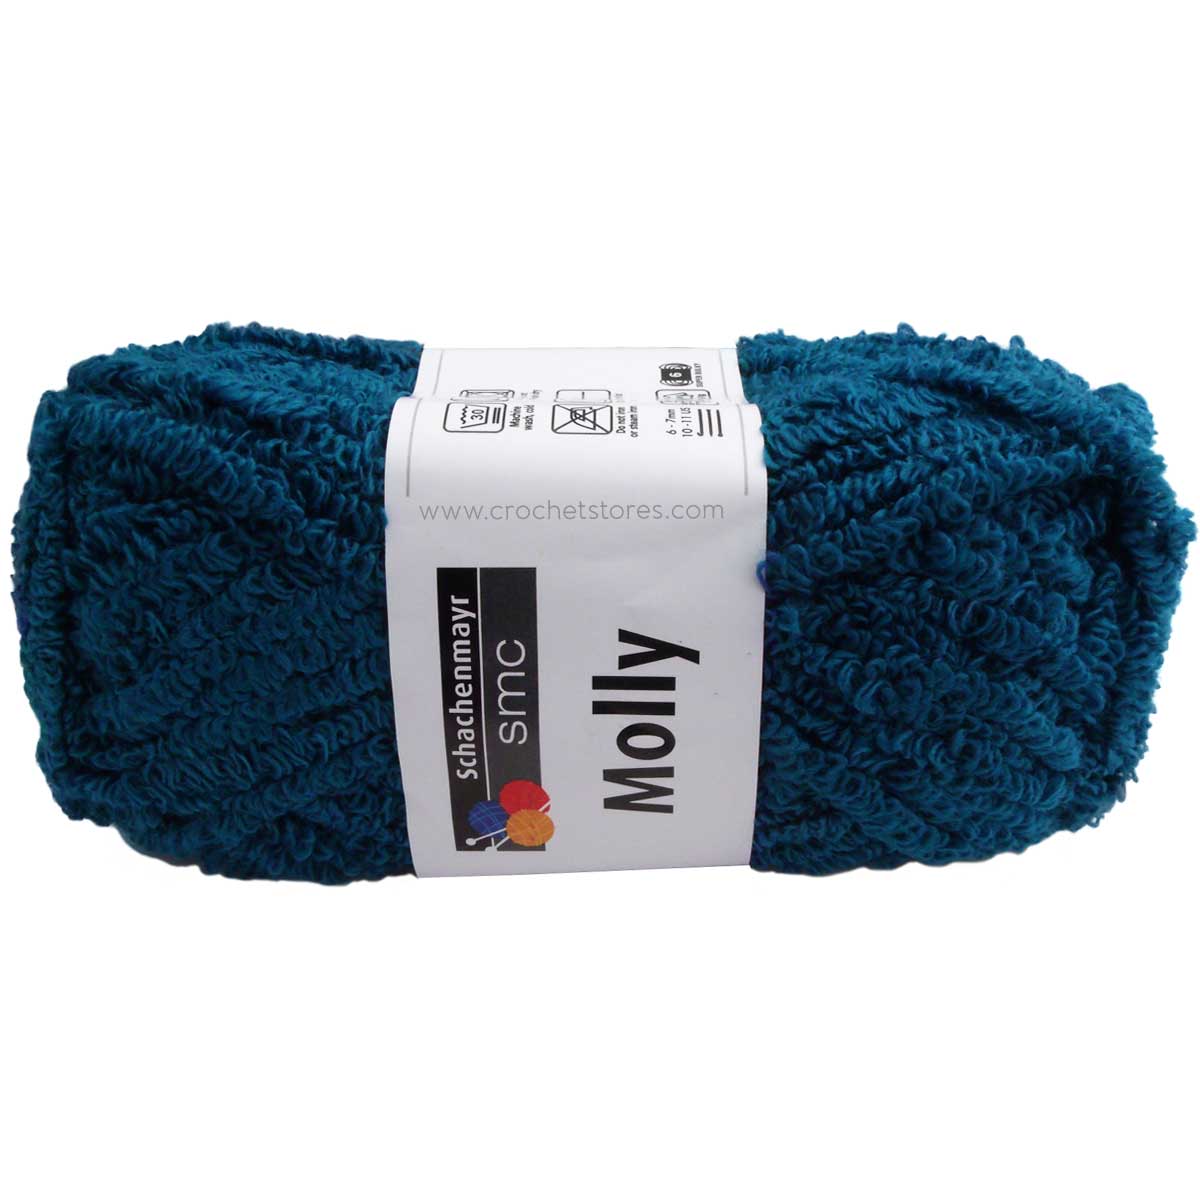 MOLLY - Crochetstores9807532-694082700934119